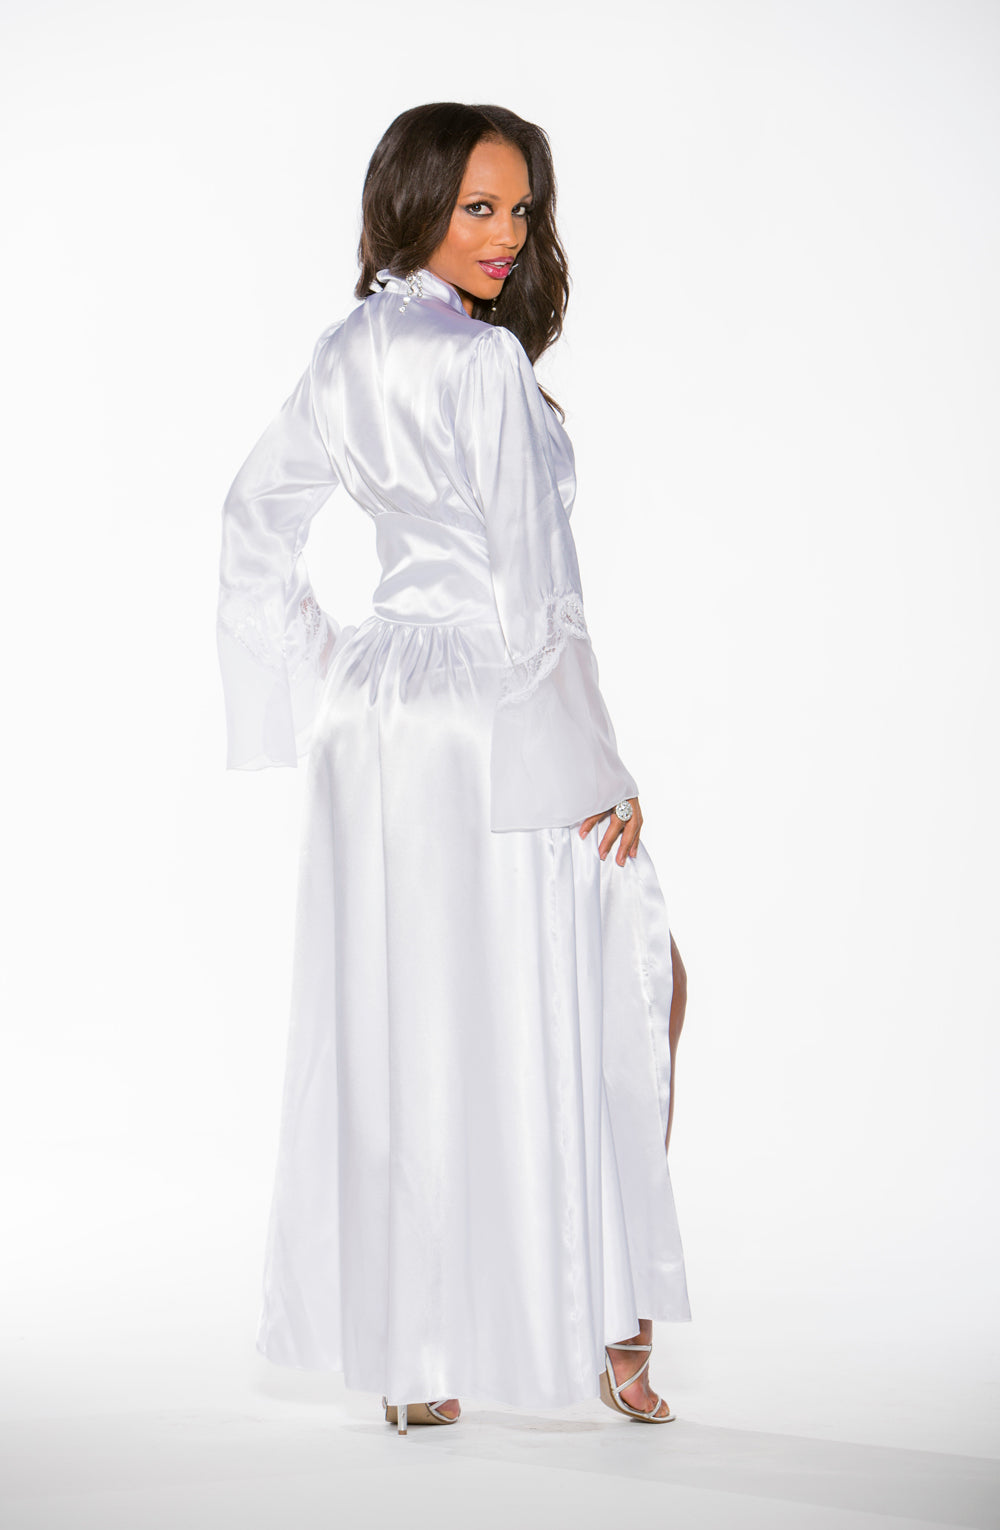 Shirley of Hollywood 20559 Long Robe White | chiffon, longrobe, Nightwear | Shirley of Hollywood